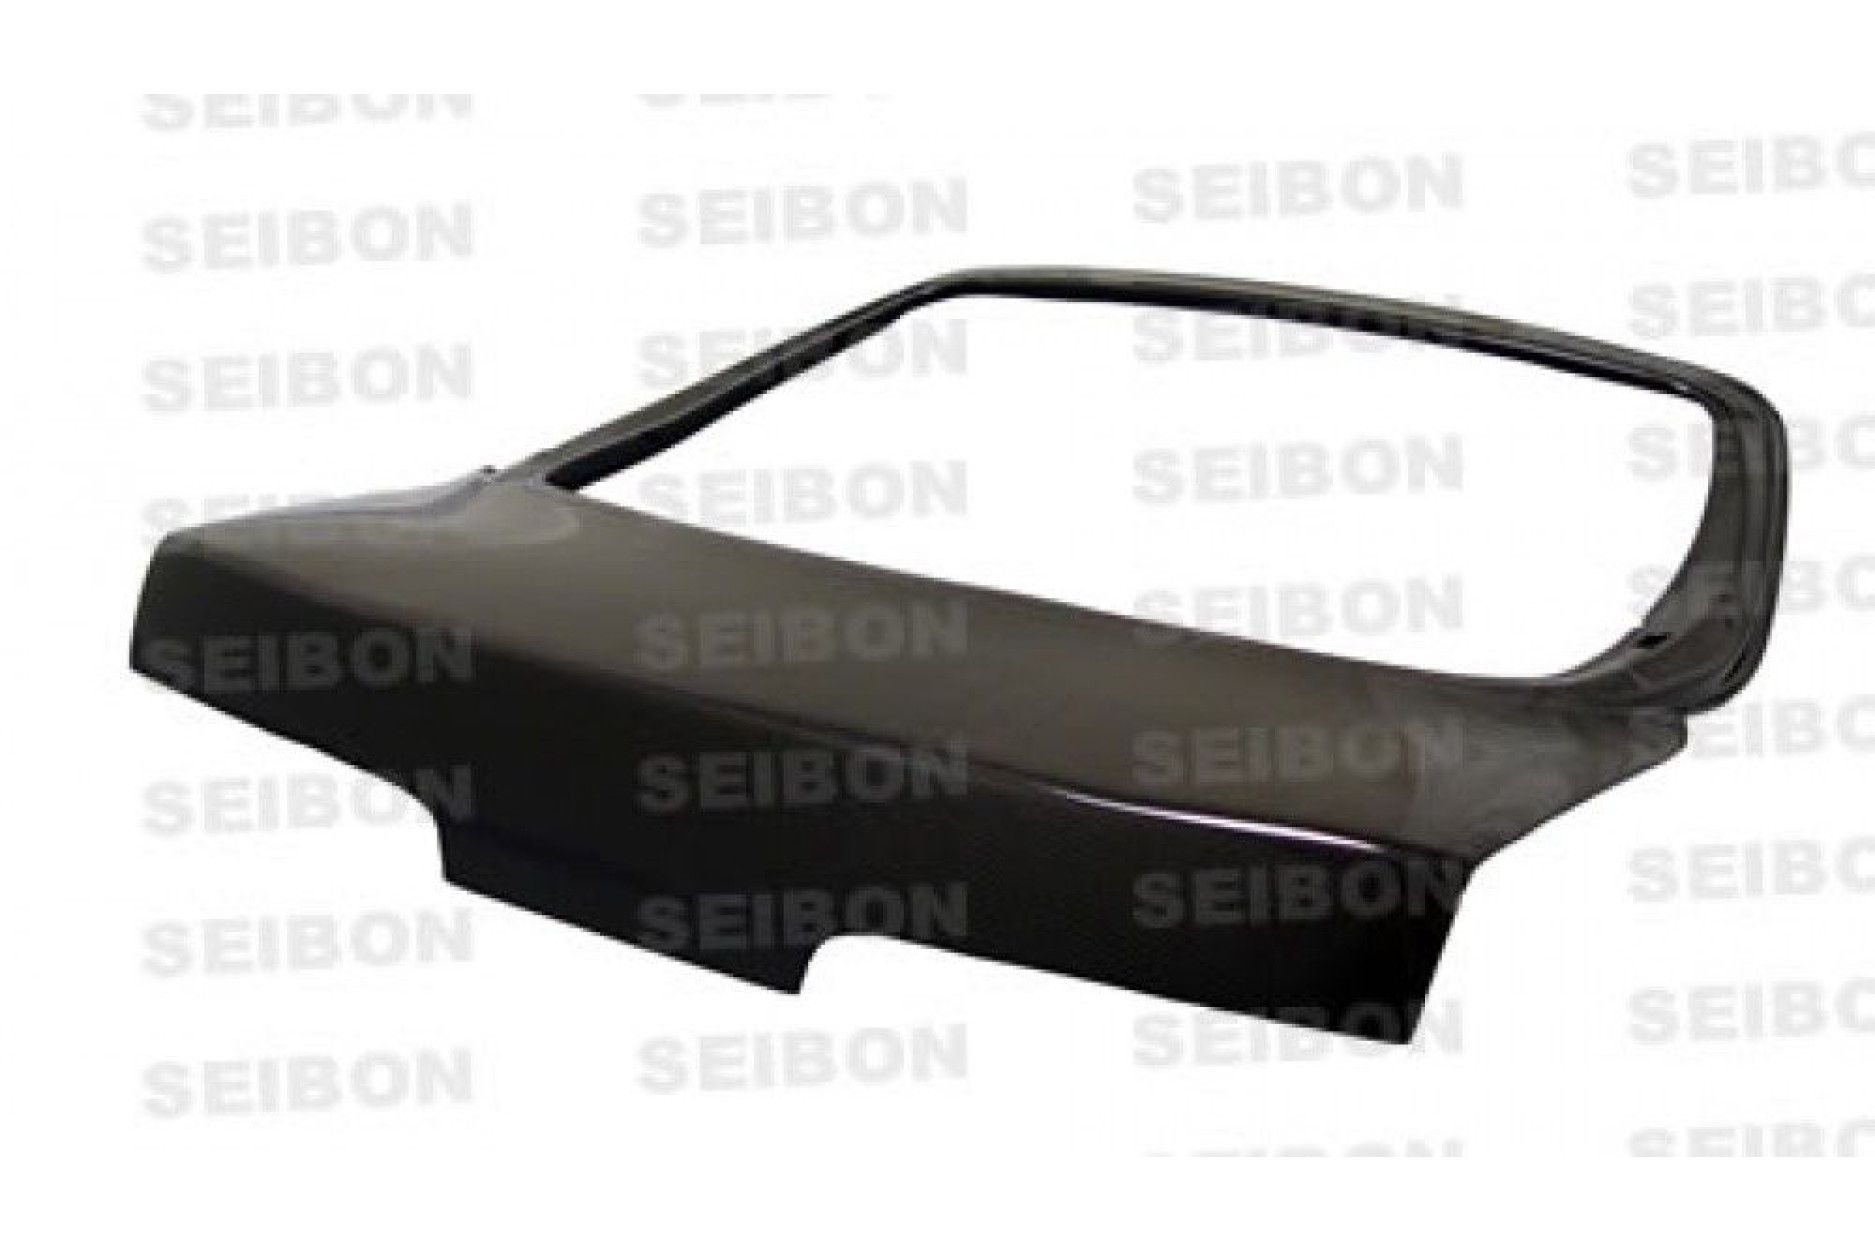 Seibon carbon TRUNK for ACURA INTEGRA 2DR 1994 - 2001 OE-style